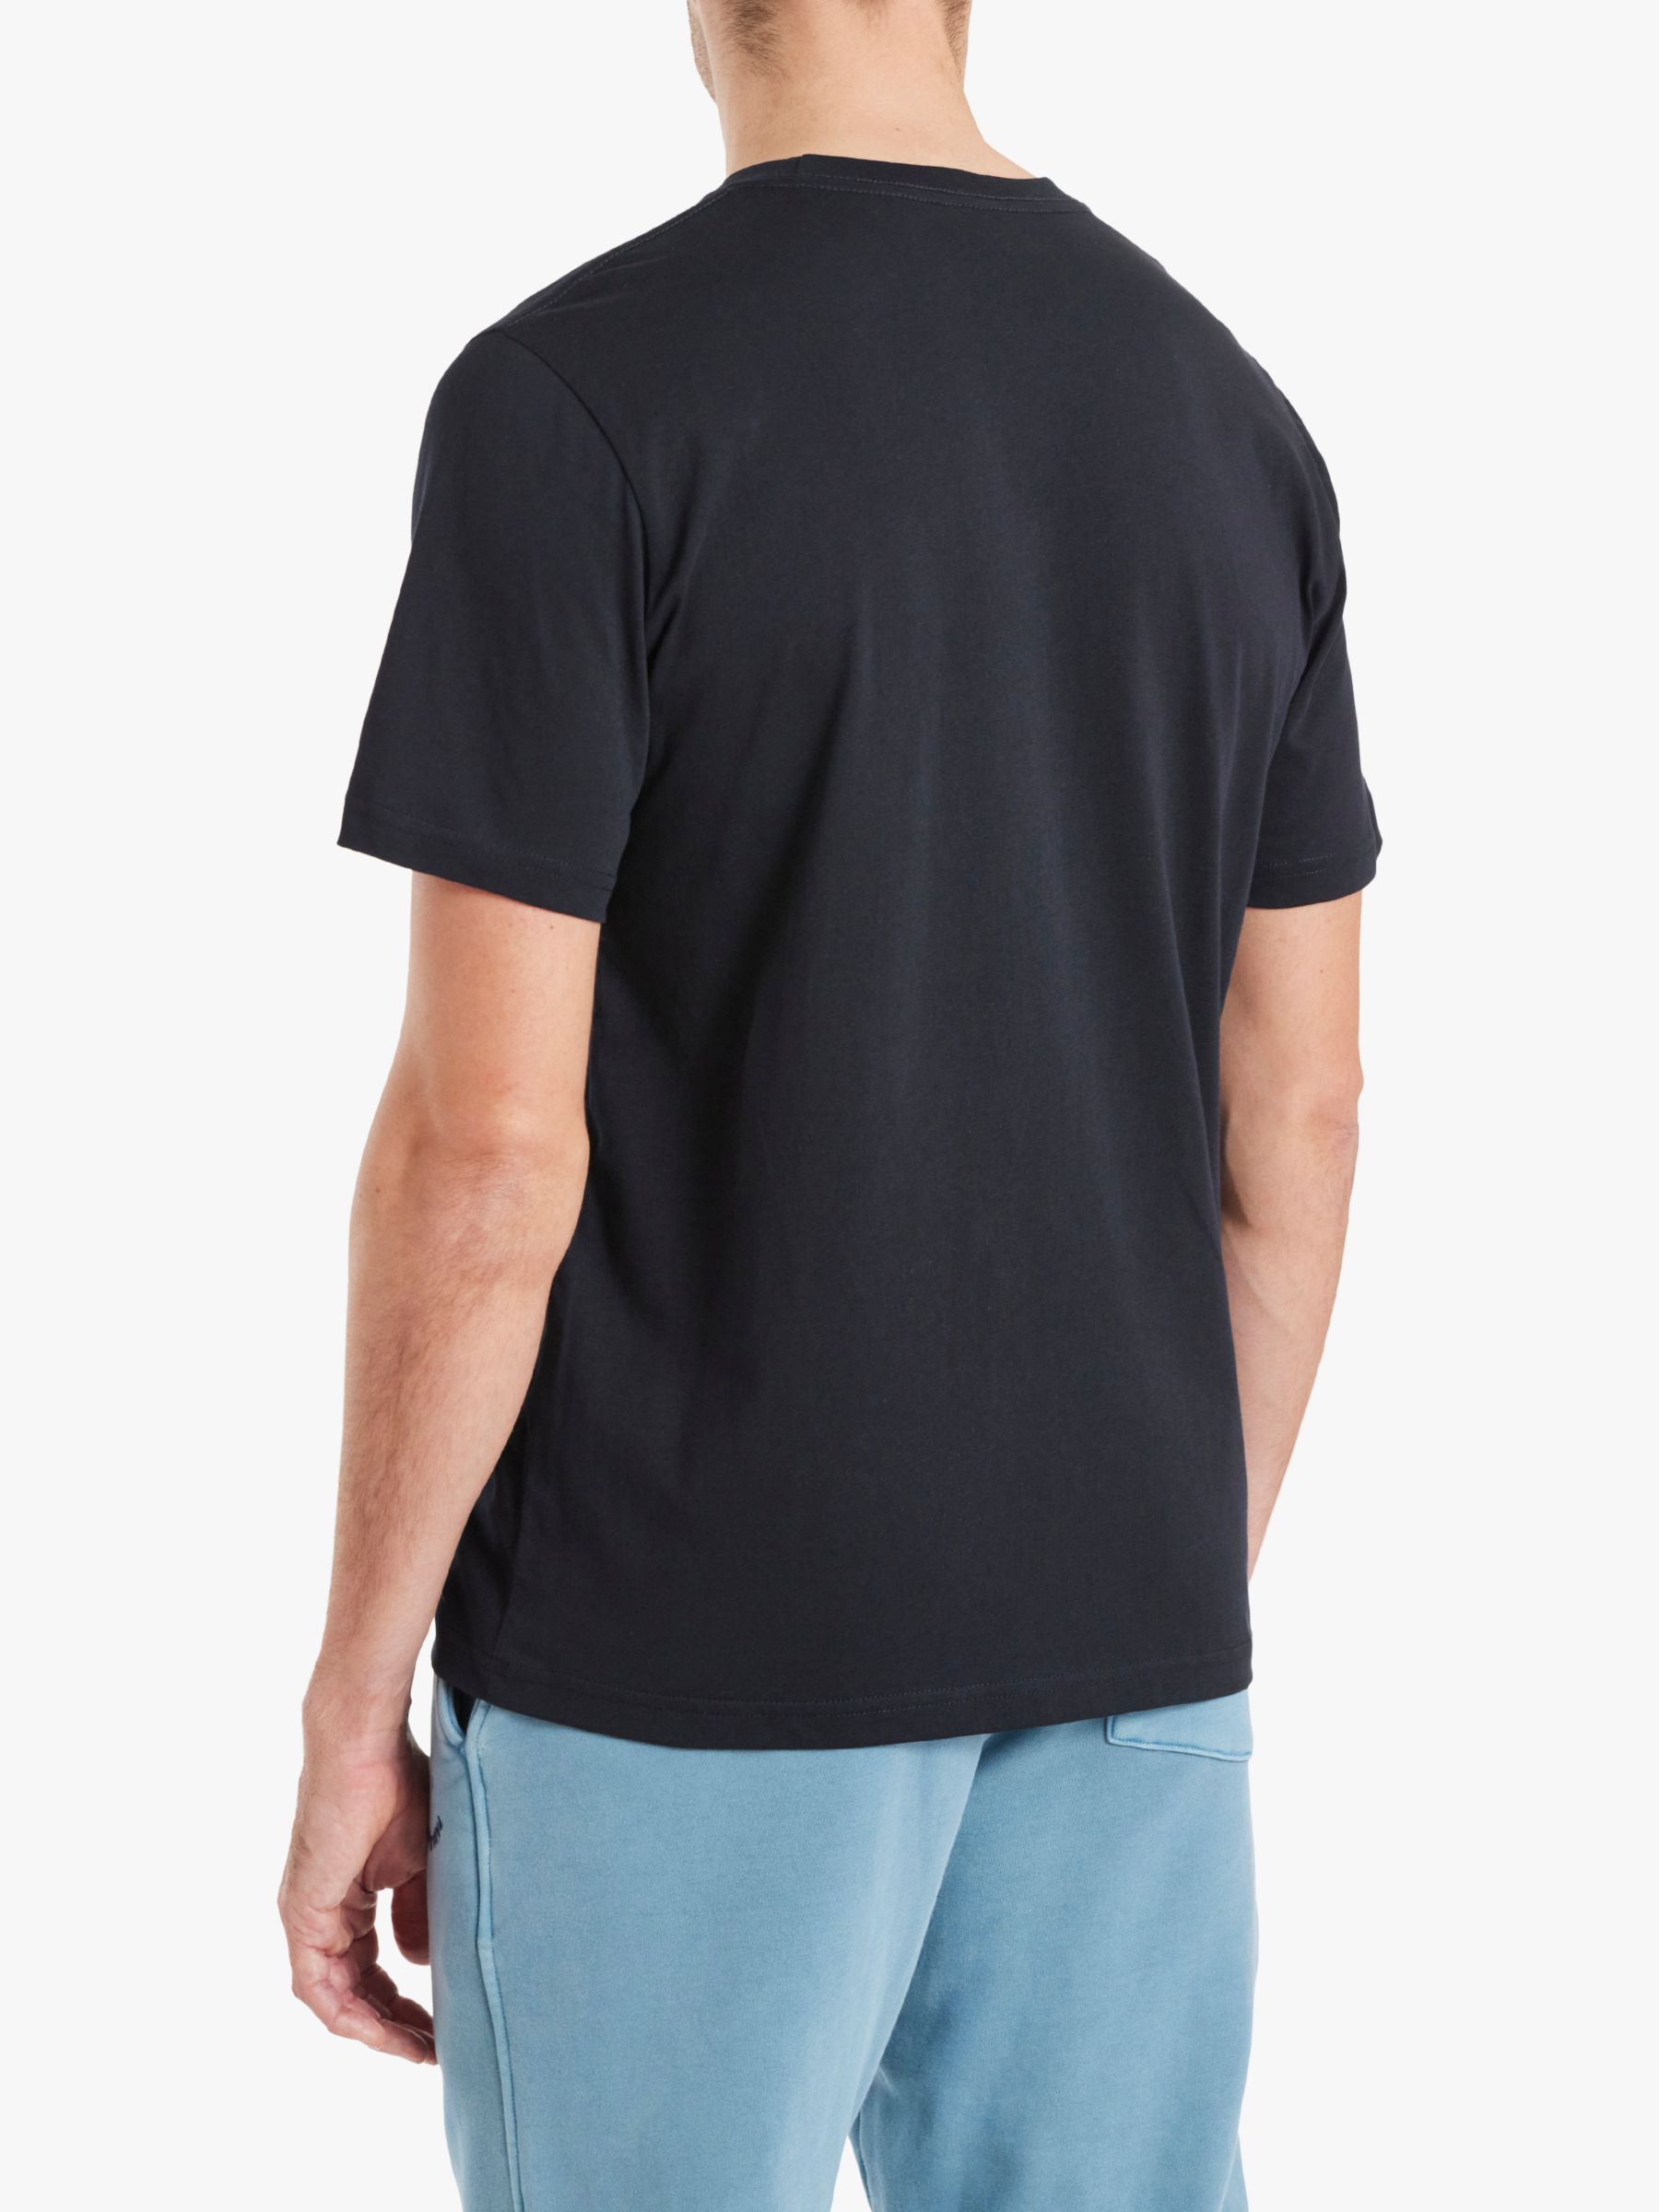 Paul Smith Regular Fit Stripe Logo T-Shirt, Blue, L